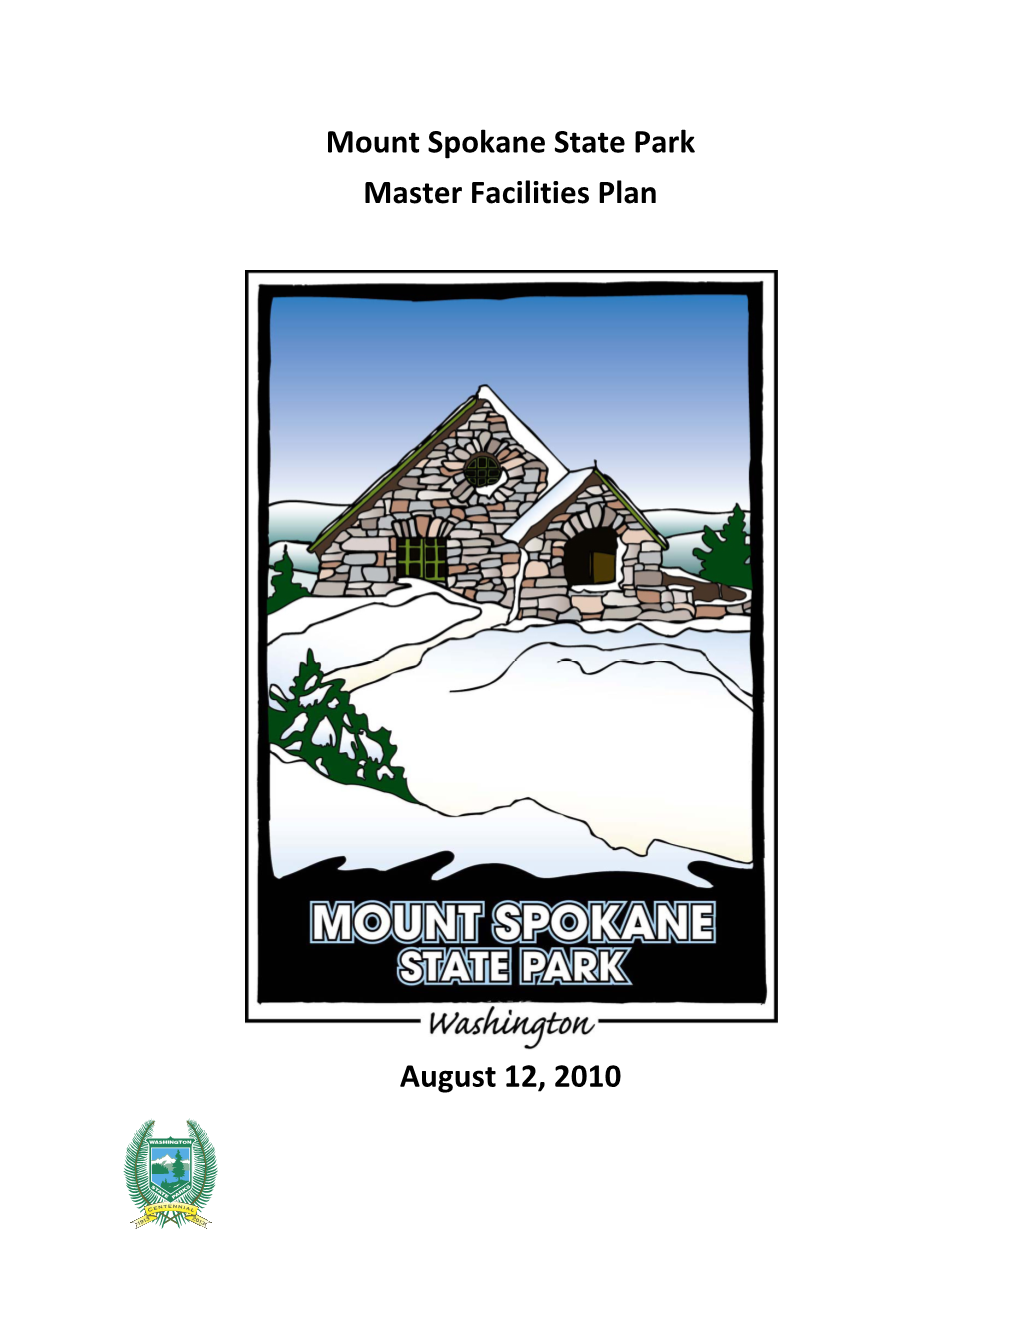 Master Facility Plan of 2010